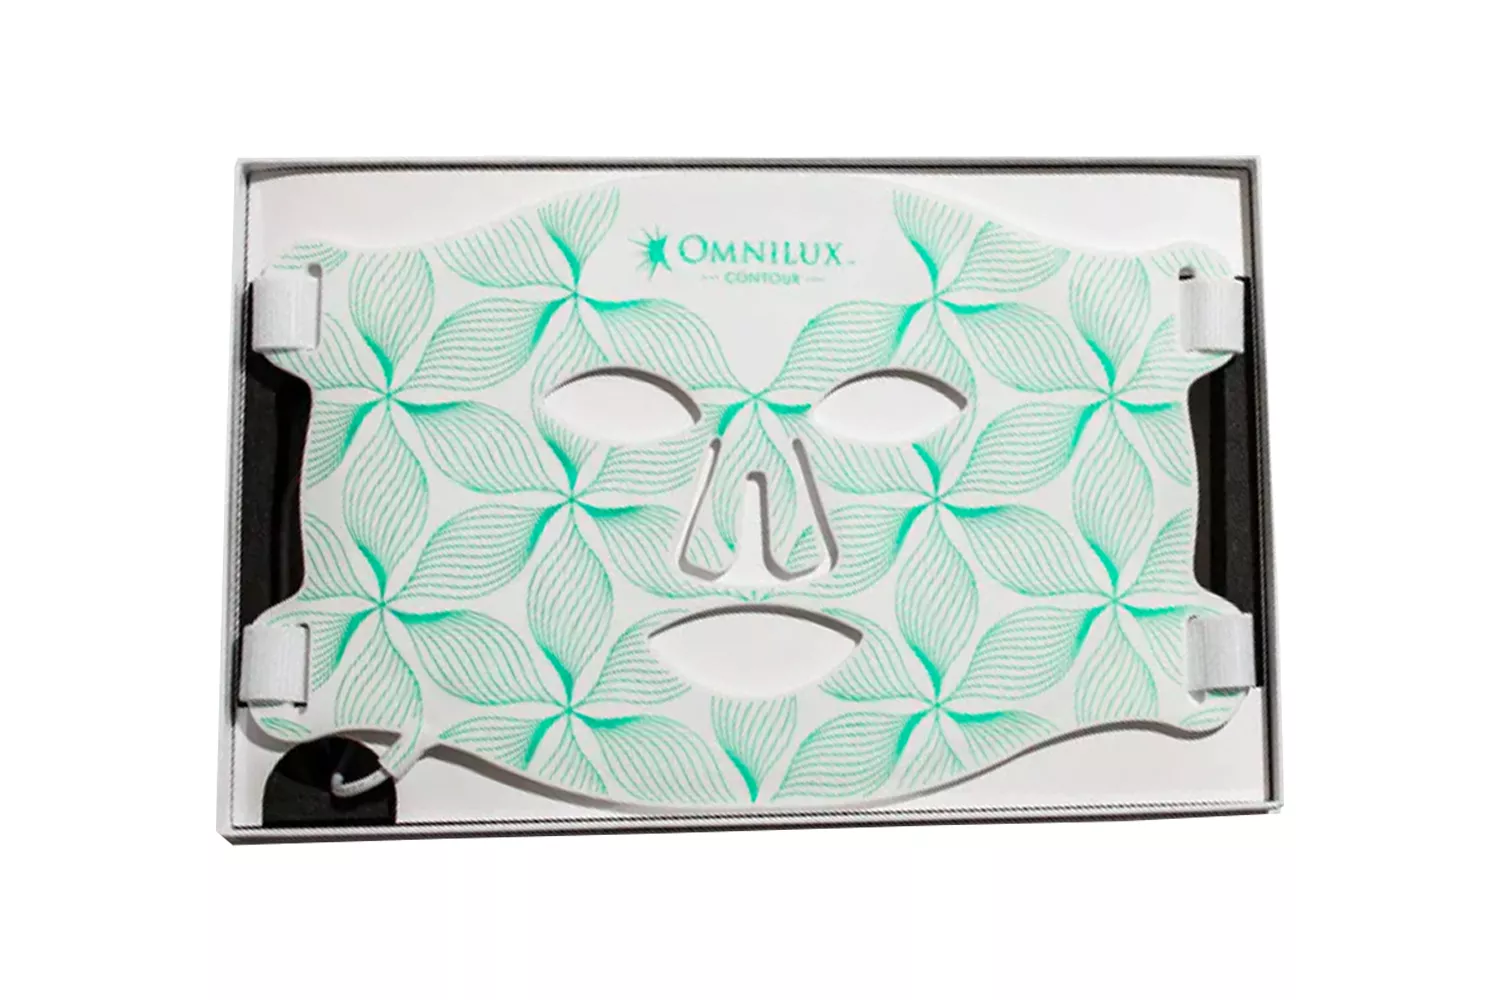 OmniLux LED Contour Face Mask